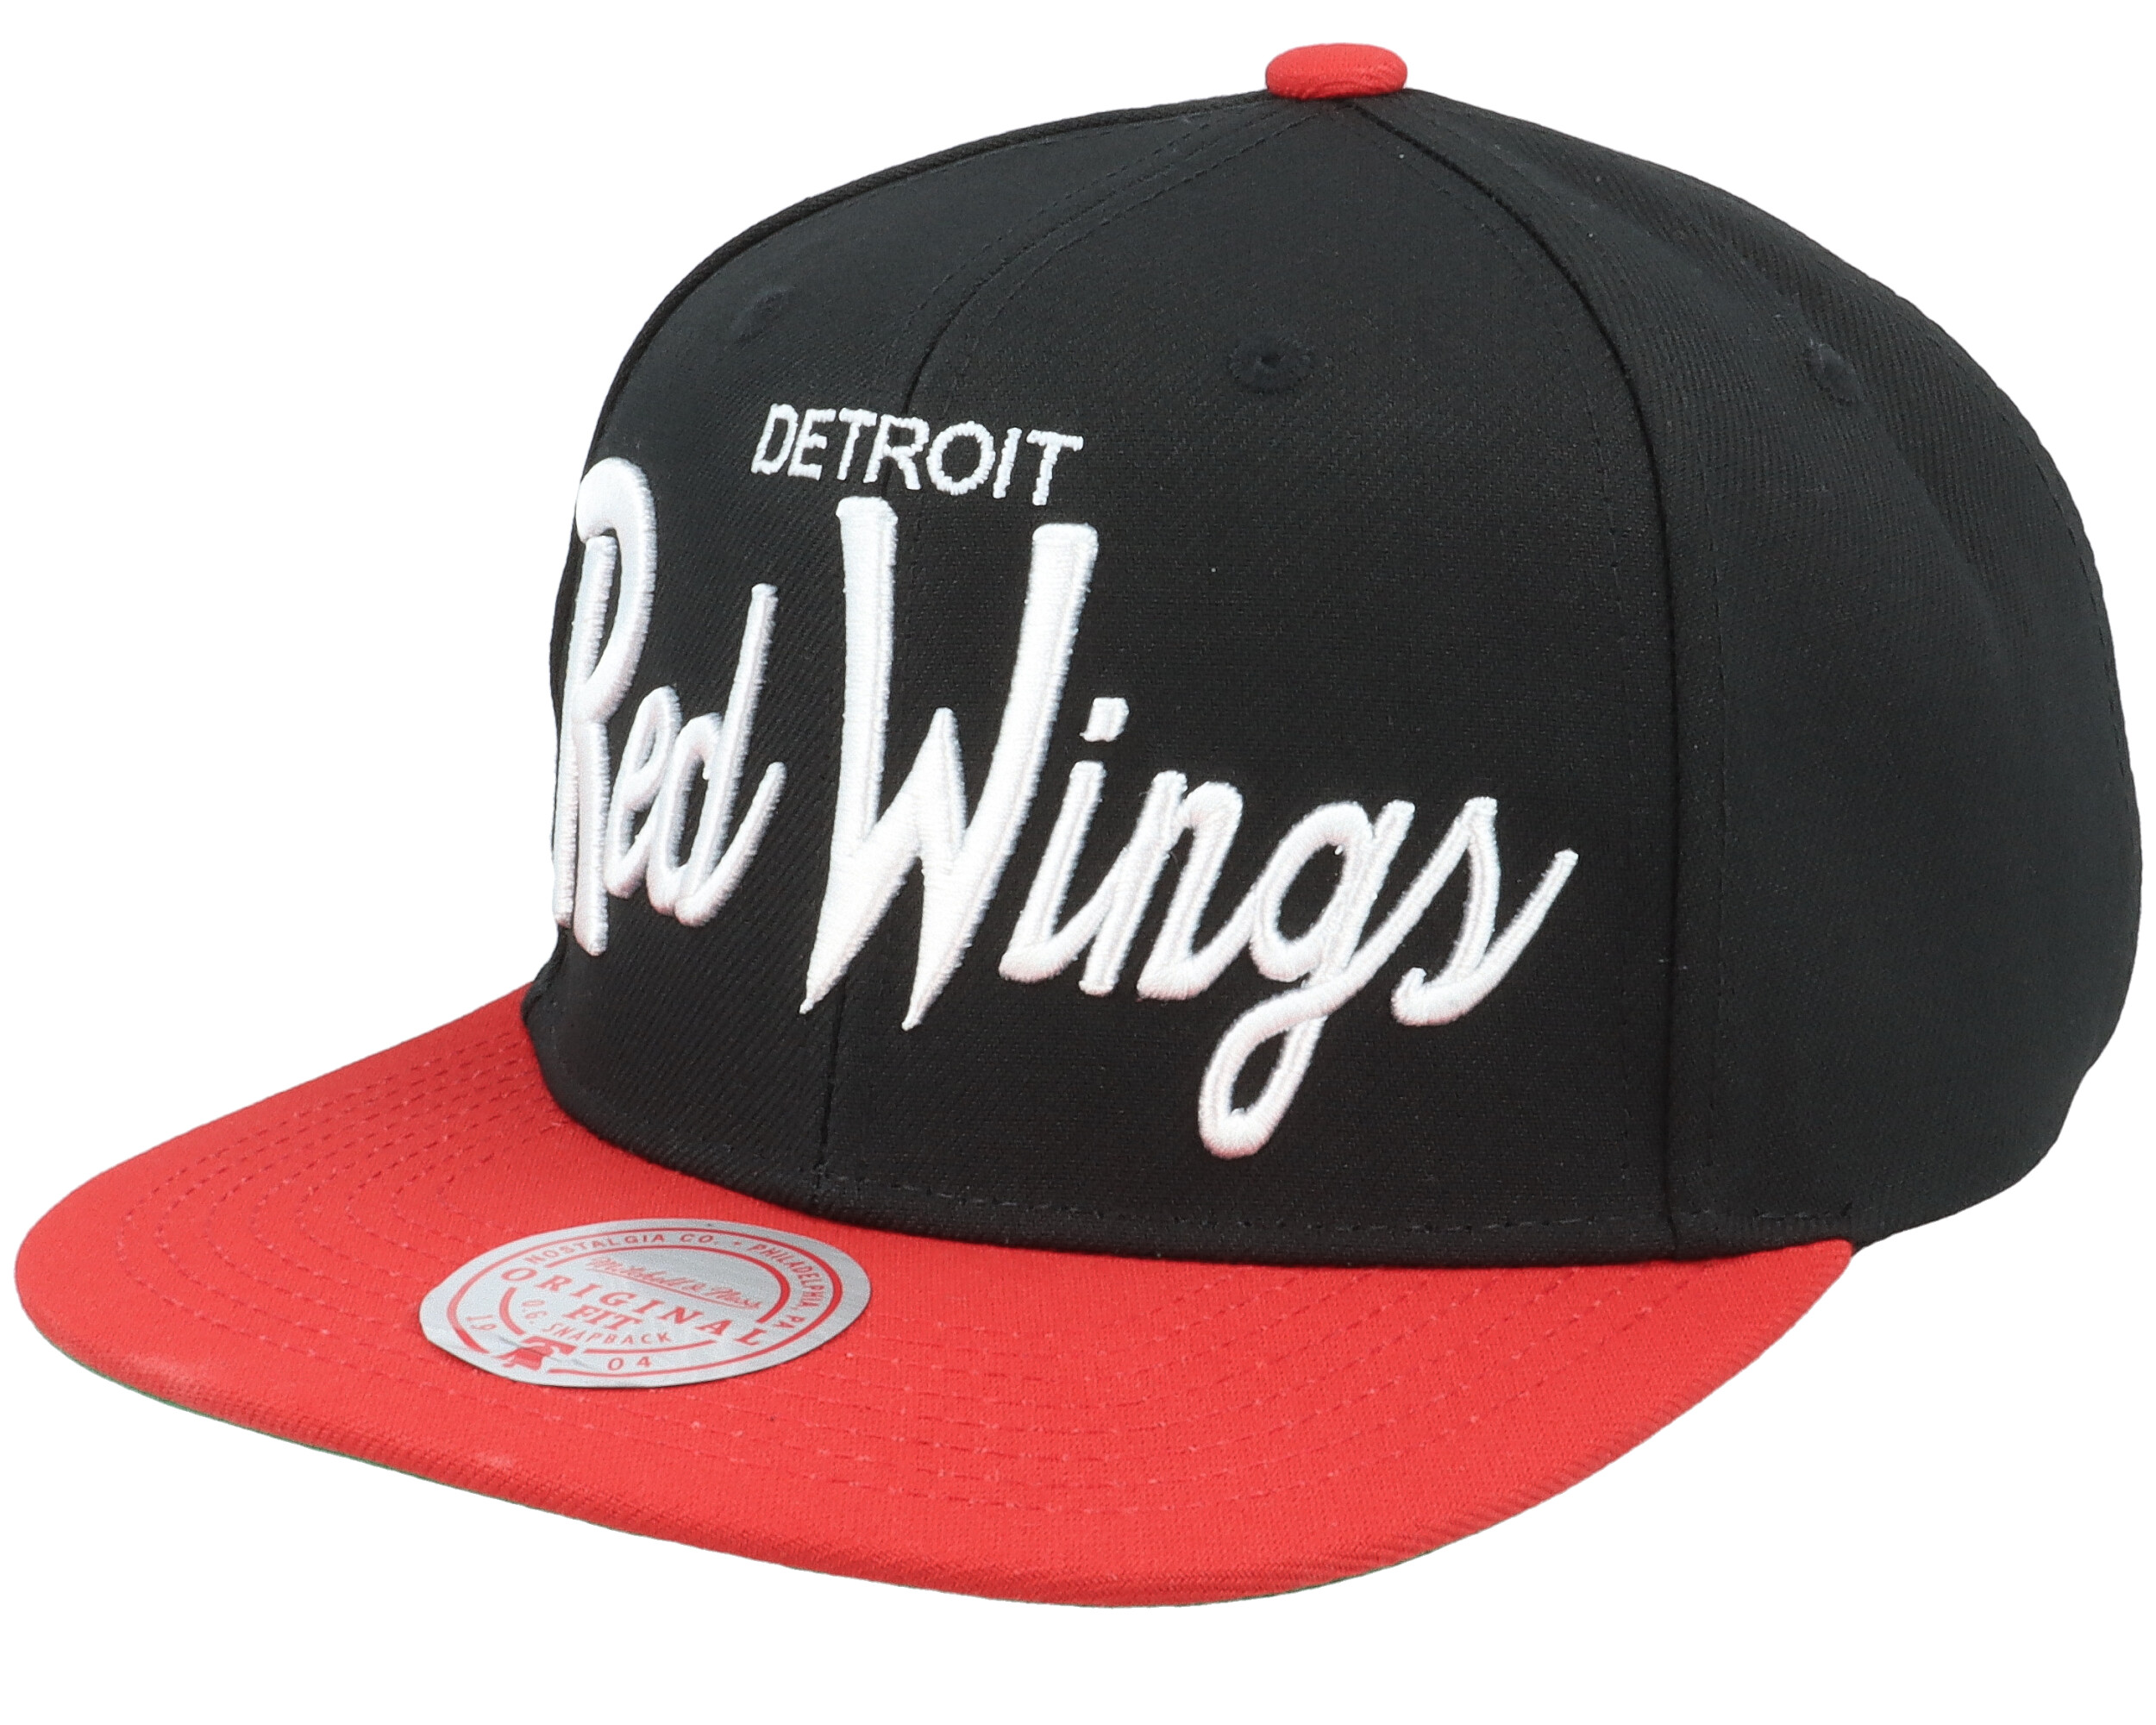 New Era Caps Detroit Red Wings Beanie Black/Red/White